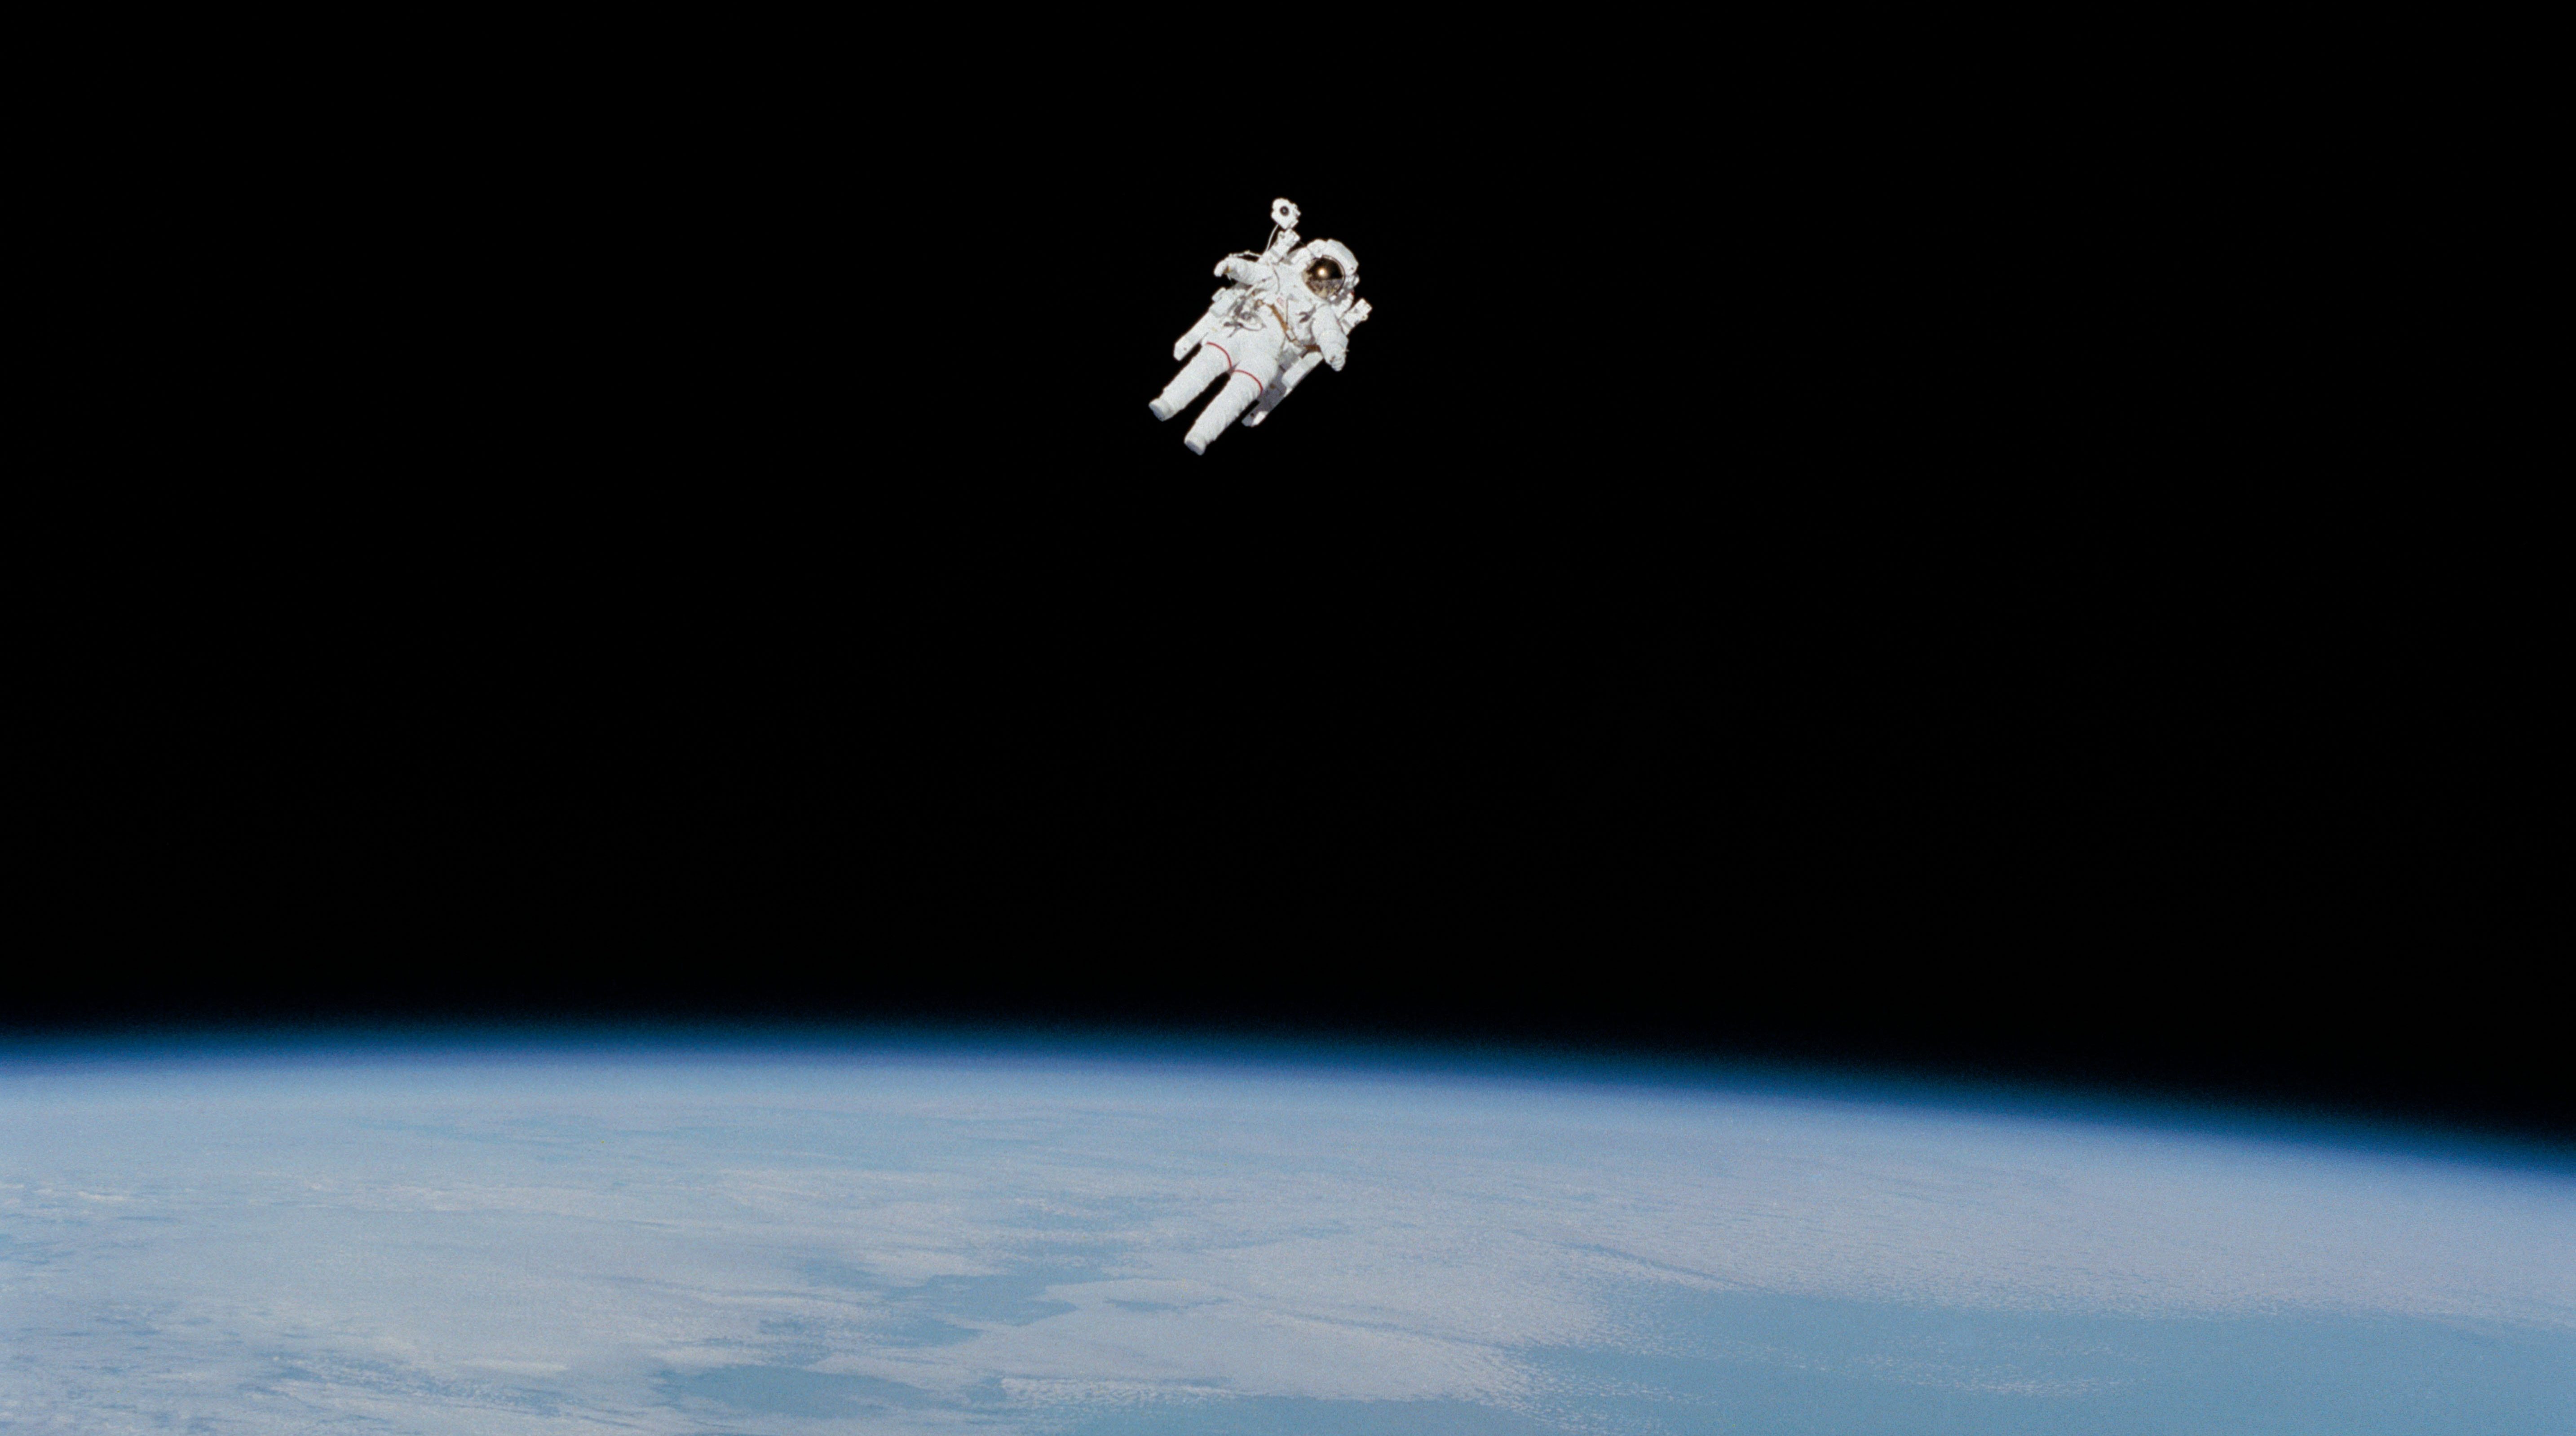 An astronaut space walking